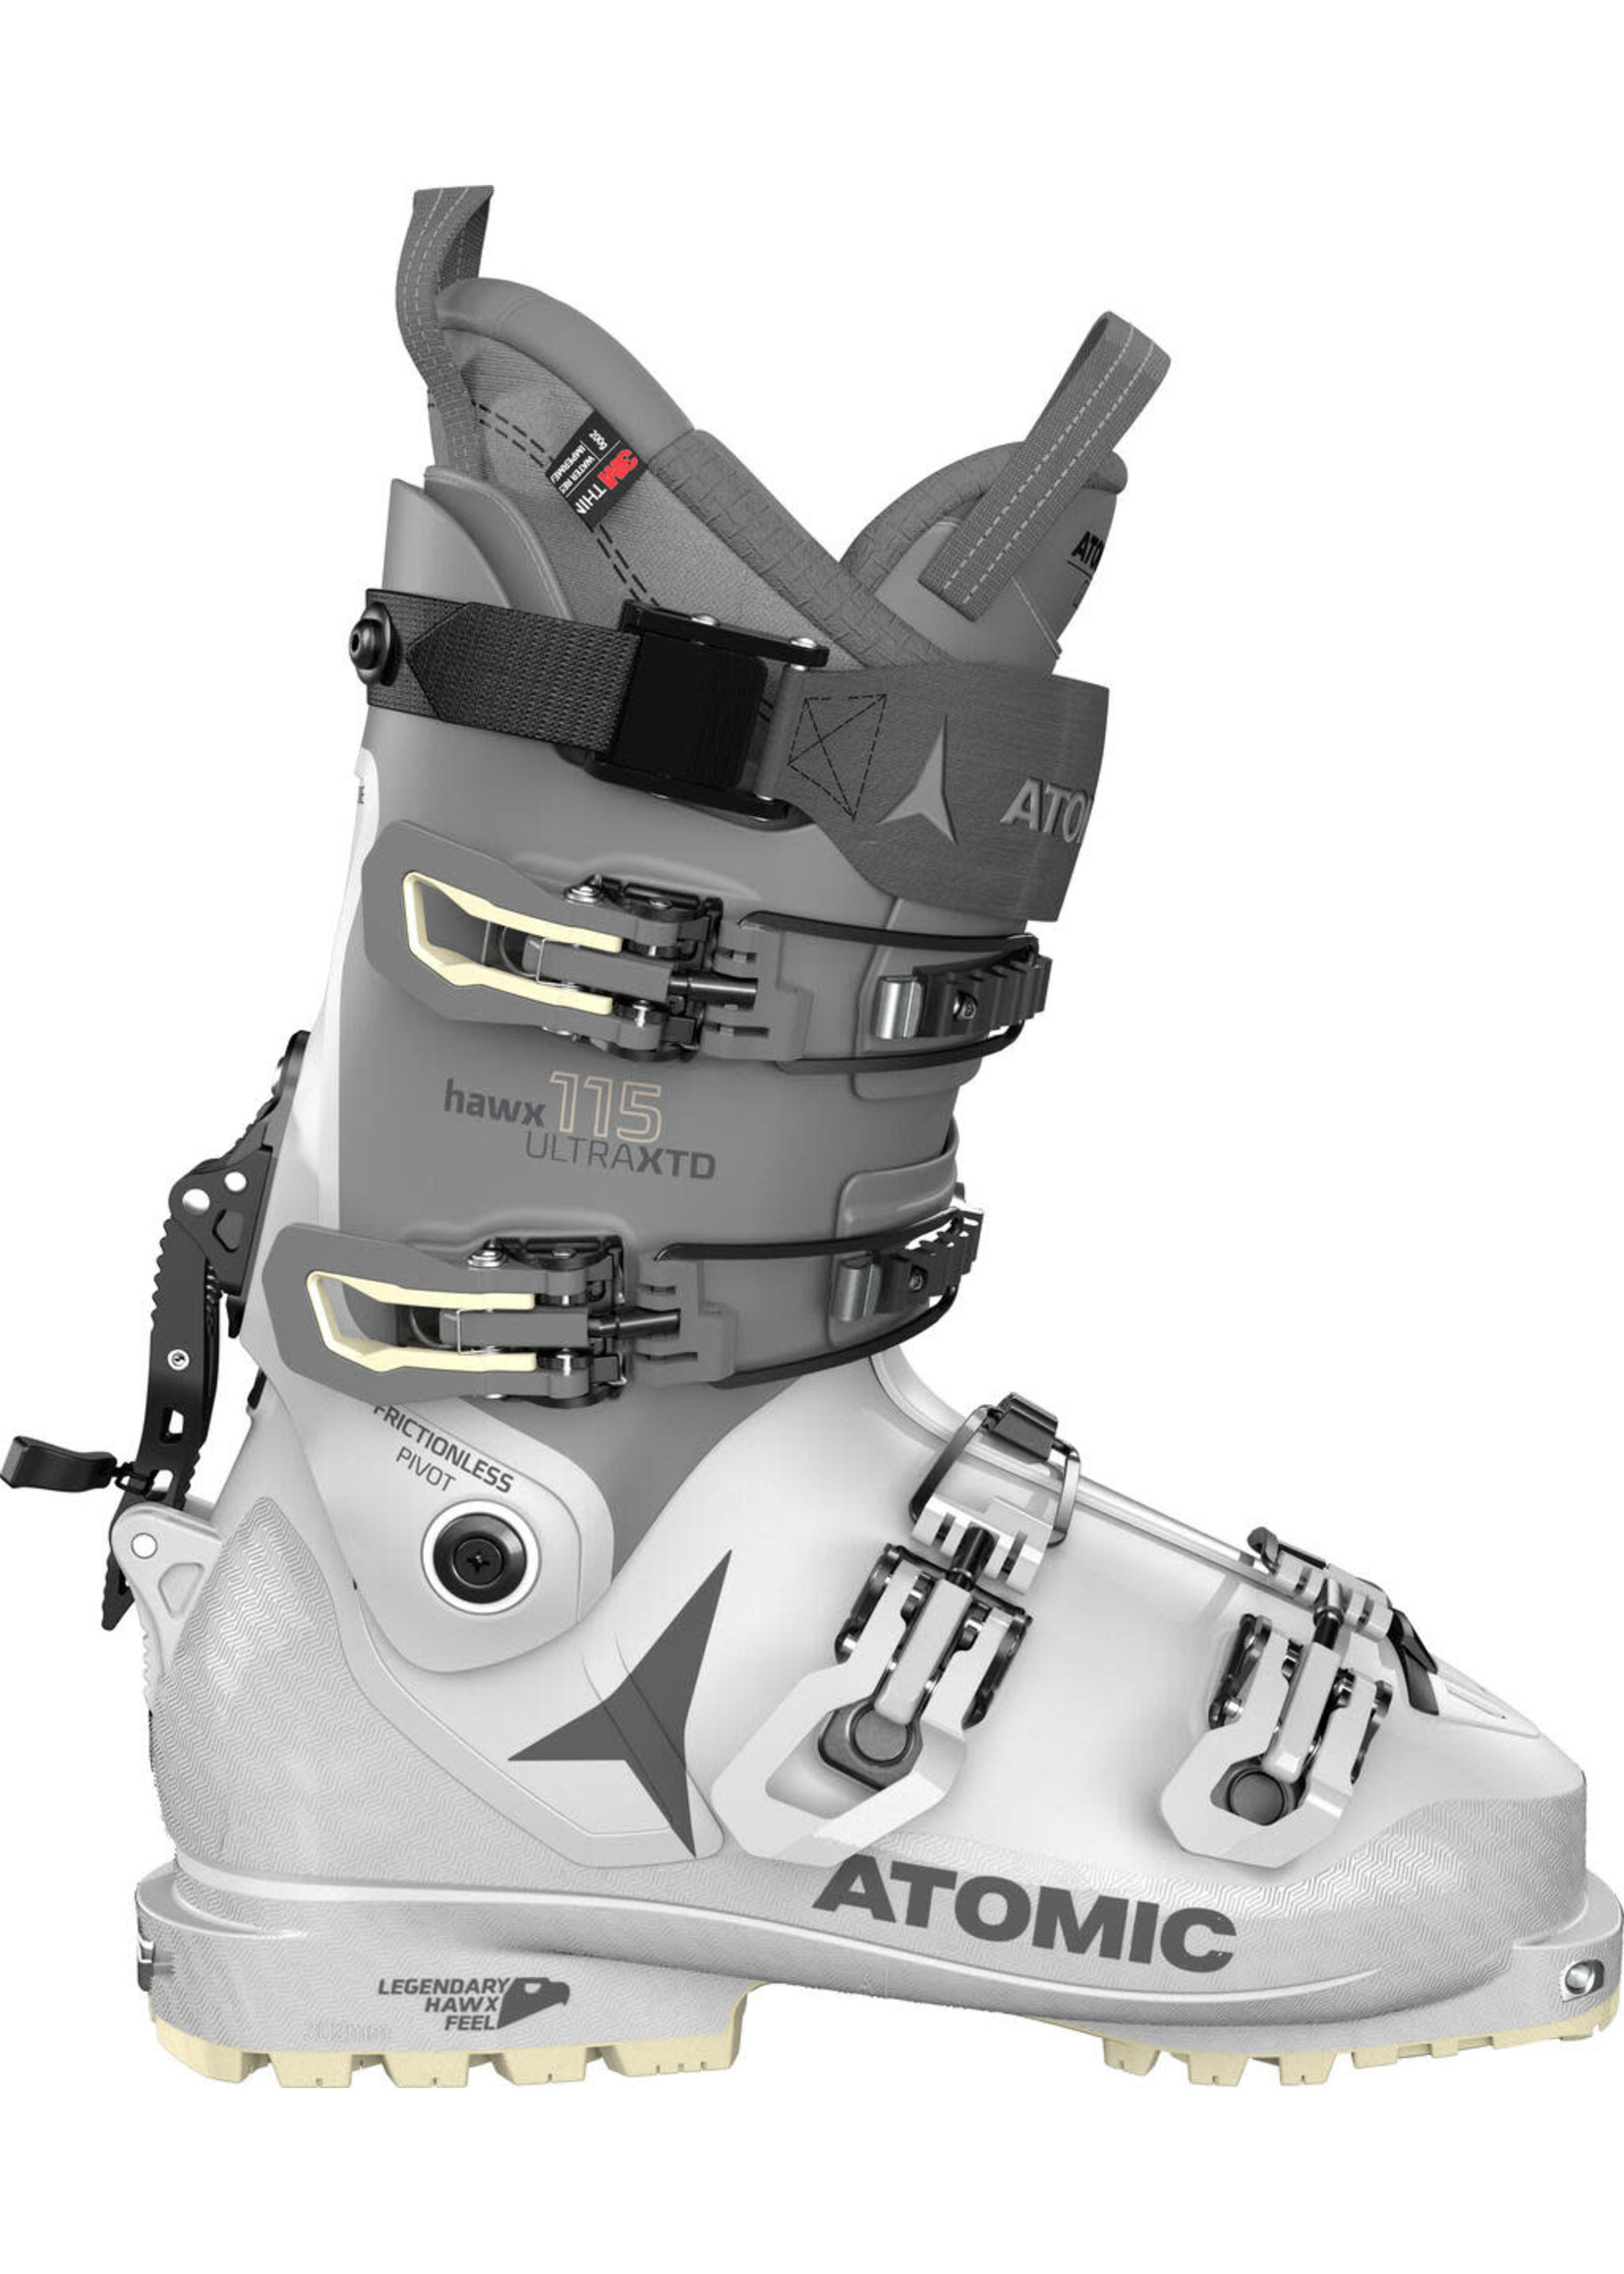 Atomic W. Touring Boot Hawx Ultra XTD 115 CT